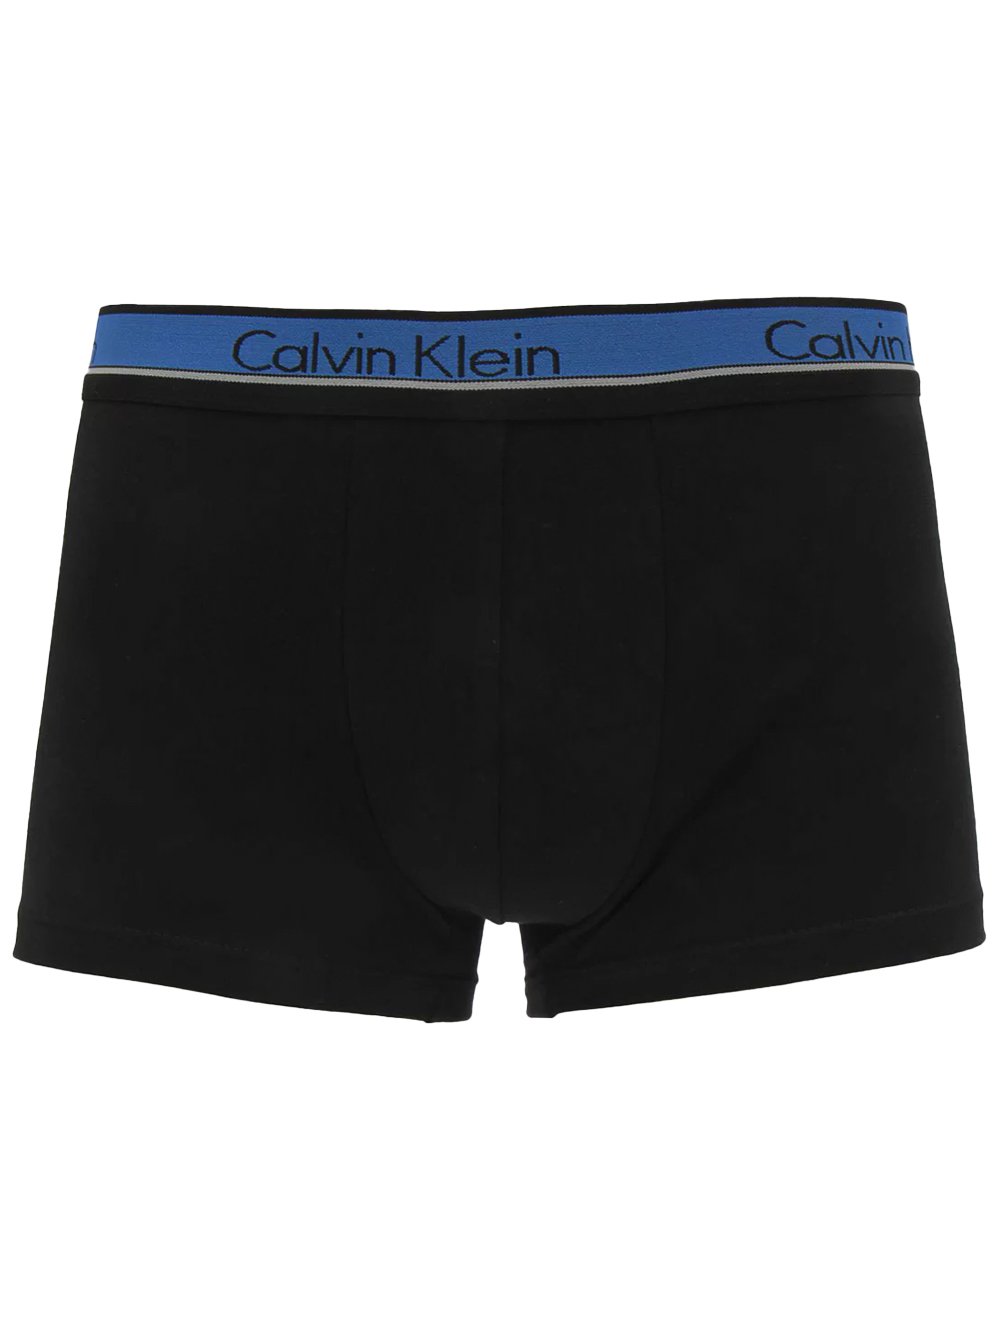 Cueca Calvin Klein Trunk C10.09 PT00 Preta 1UN